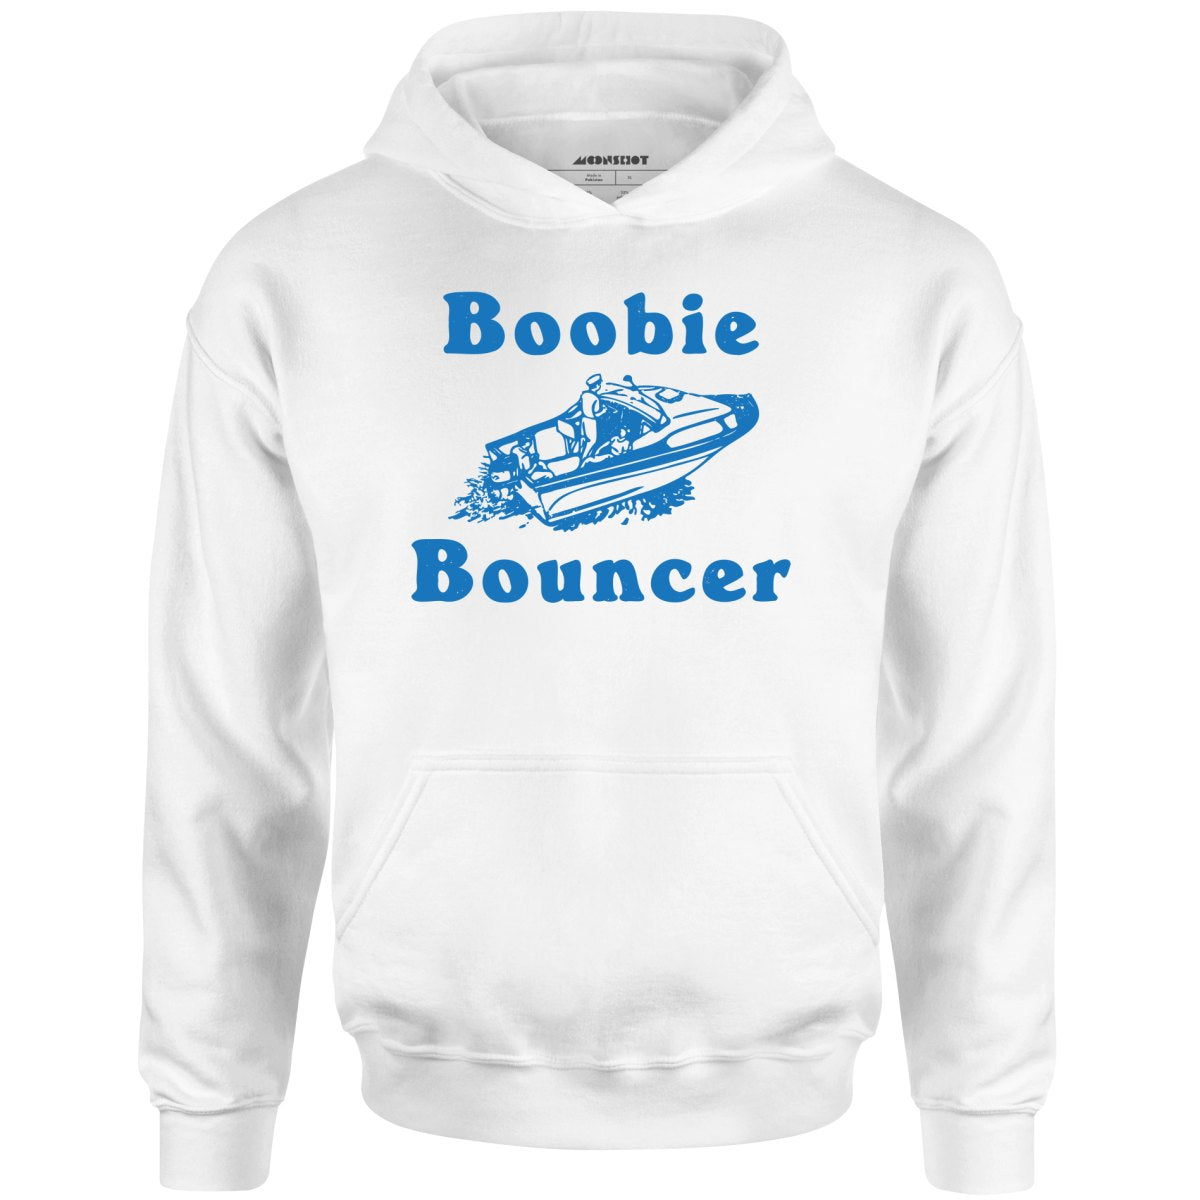 Boobie Bouncer - Unisex Hoodie